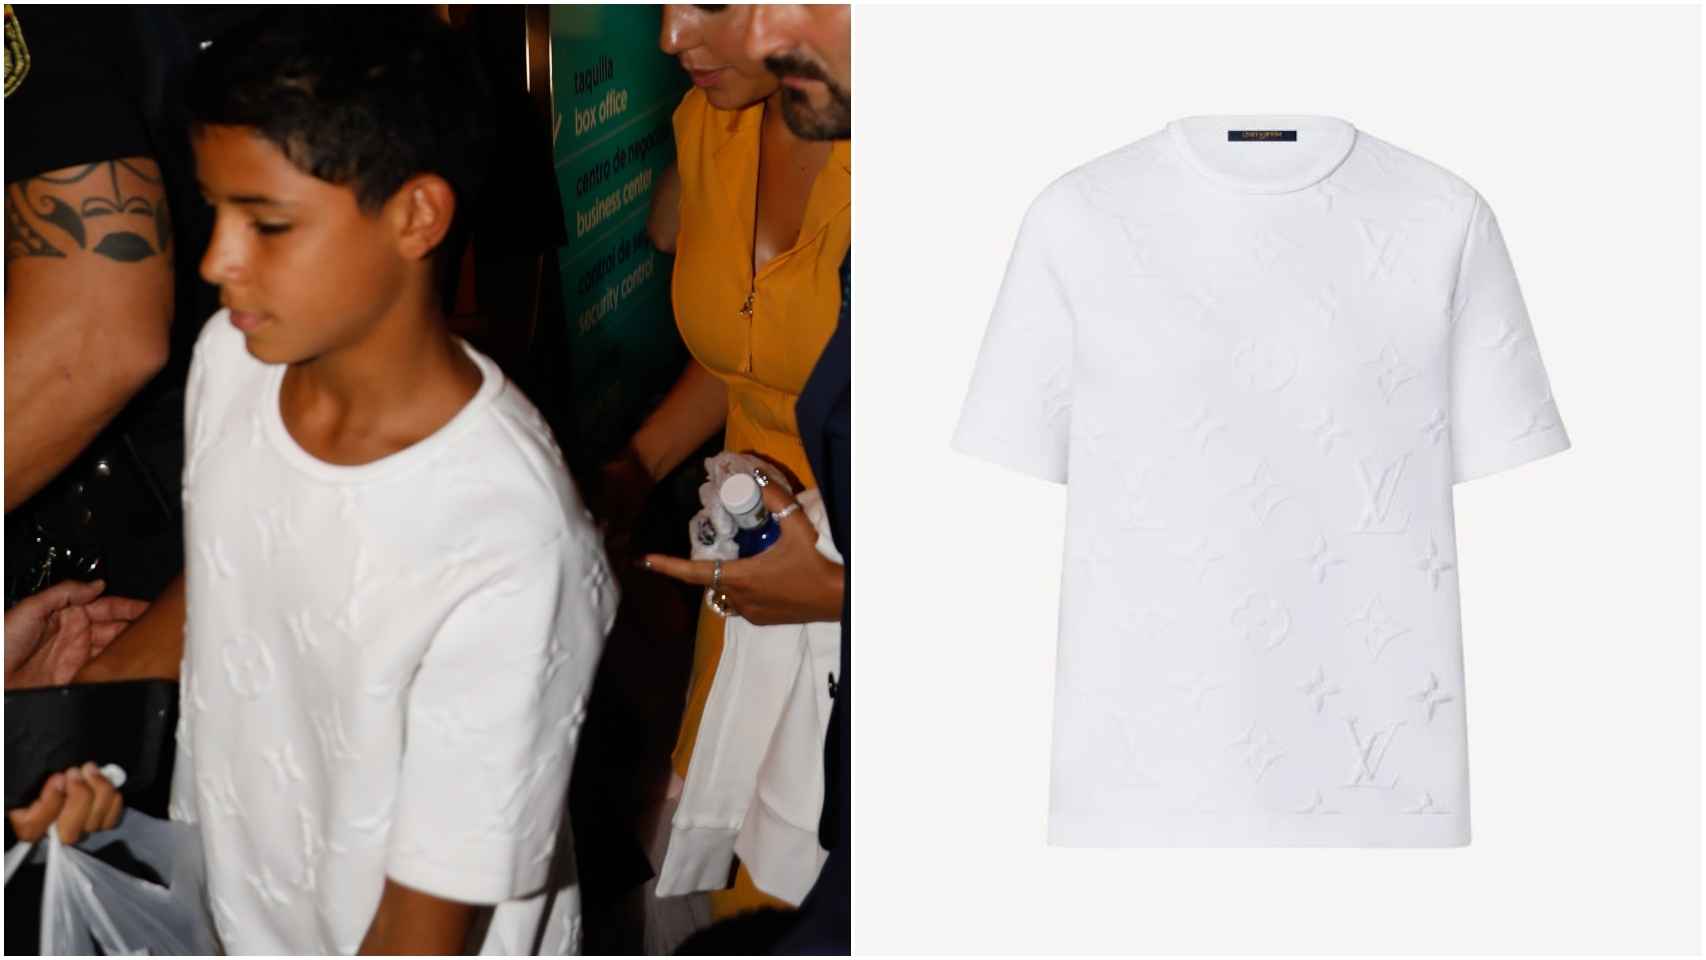 La camiseta favorita de Cristiano Ronaldo Jr. es blanca, de Louis